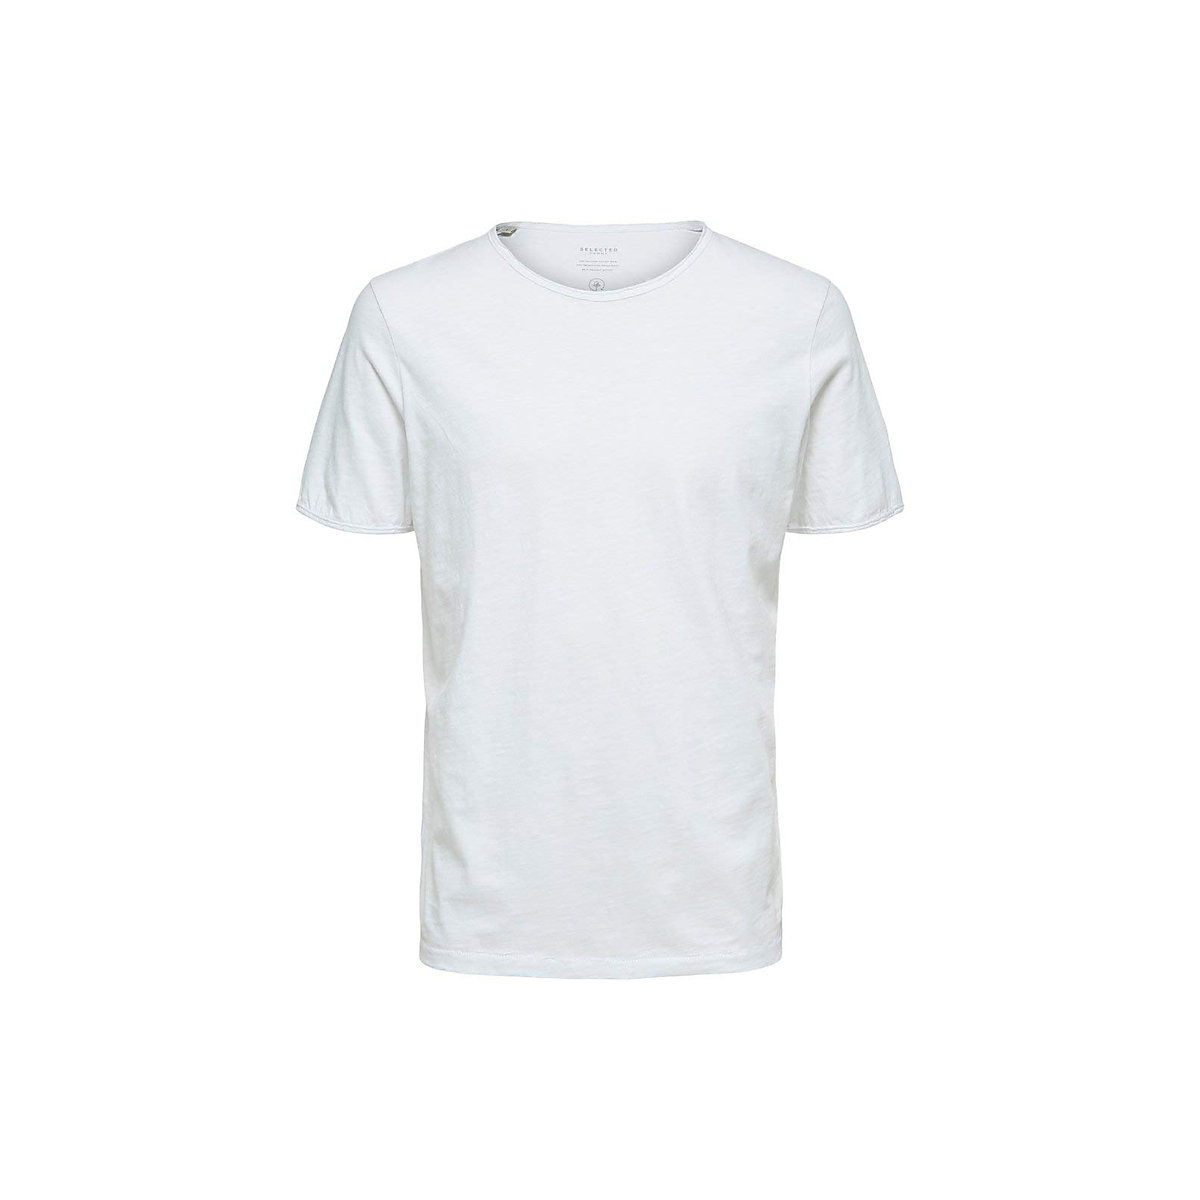 SELECTED FEMME Rundhals T-Shirt weiß